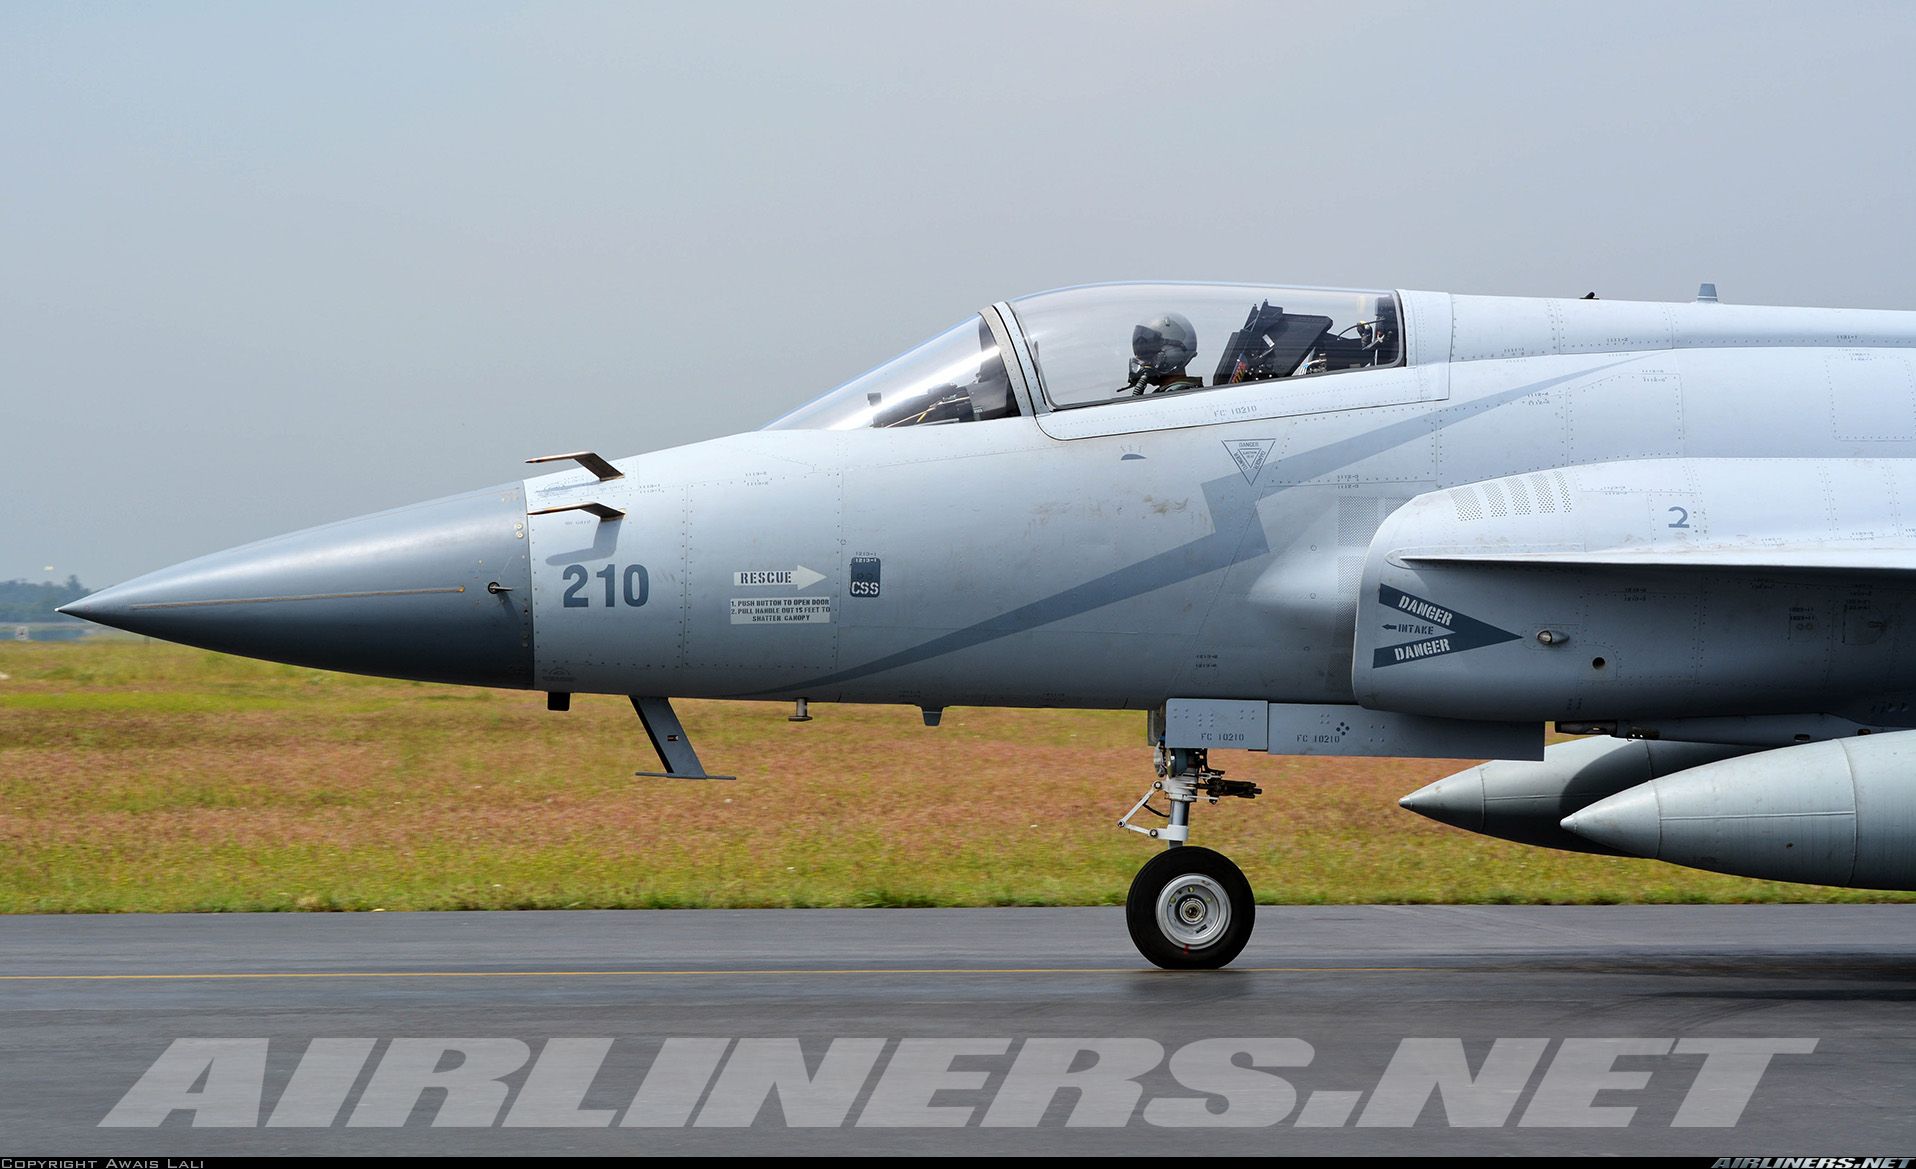 Pakistan JF 17 Thunder Force. Aviation Photo